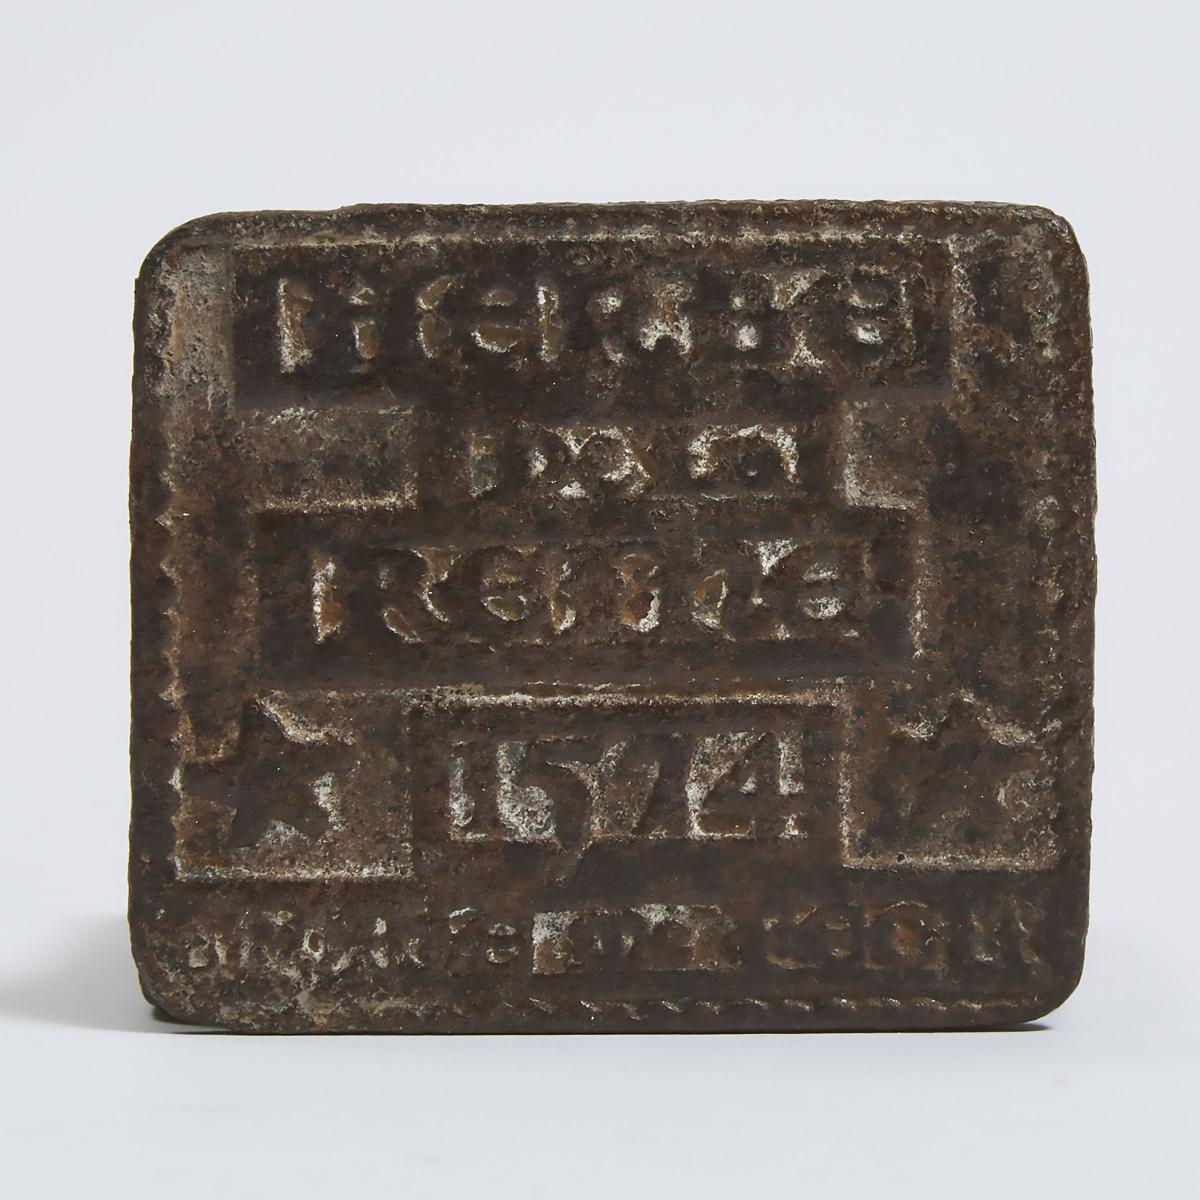 16th century French cast Iron Tobacco Snuff Box, 1574, 1.25 x 4 x 3.25 in — 3.2 x 10.2 x 8.3 cm - Image 3 of 3